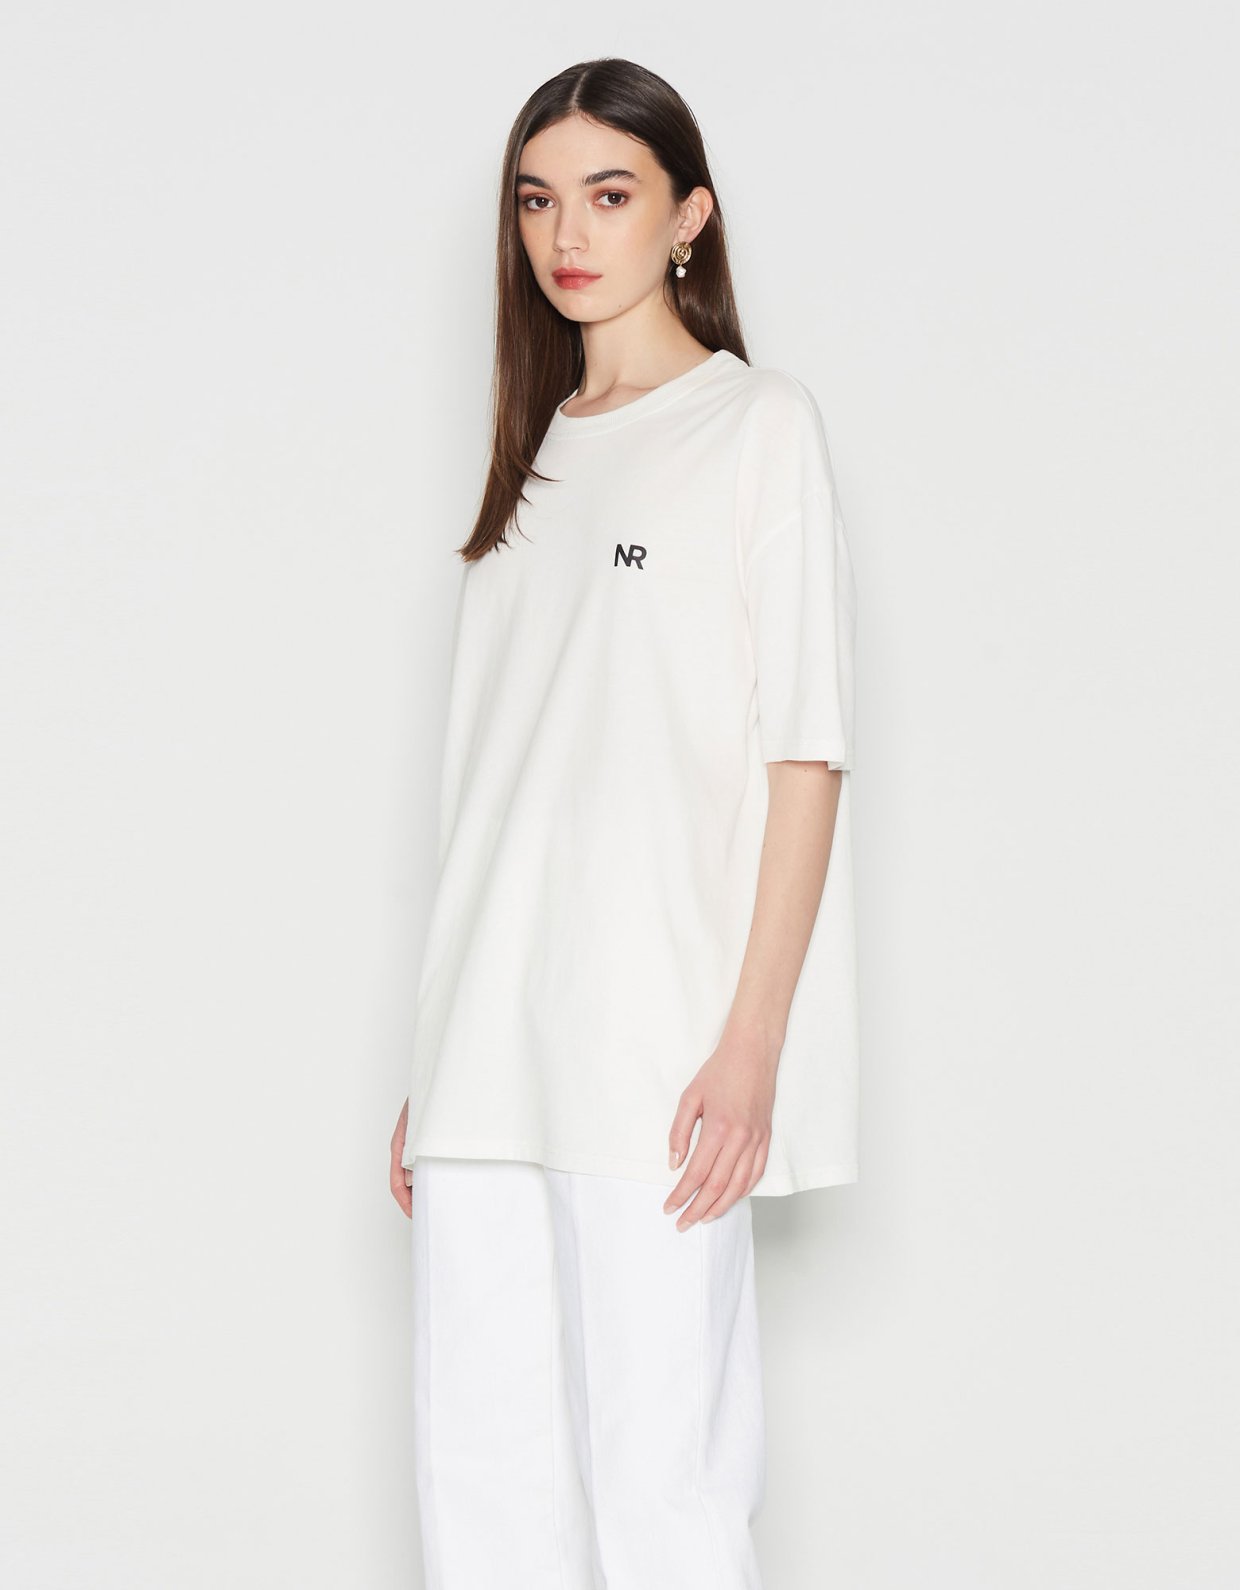 Nadia Rapti Reflected perfection t-shirt white